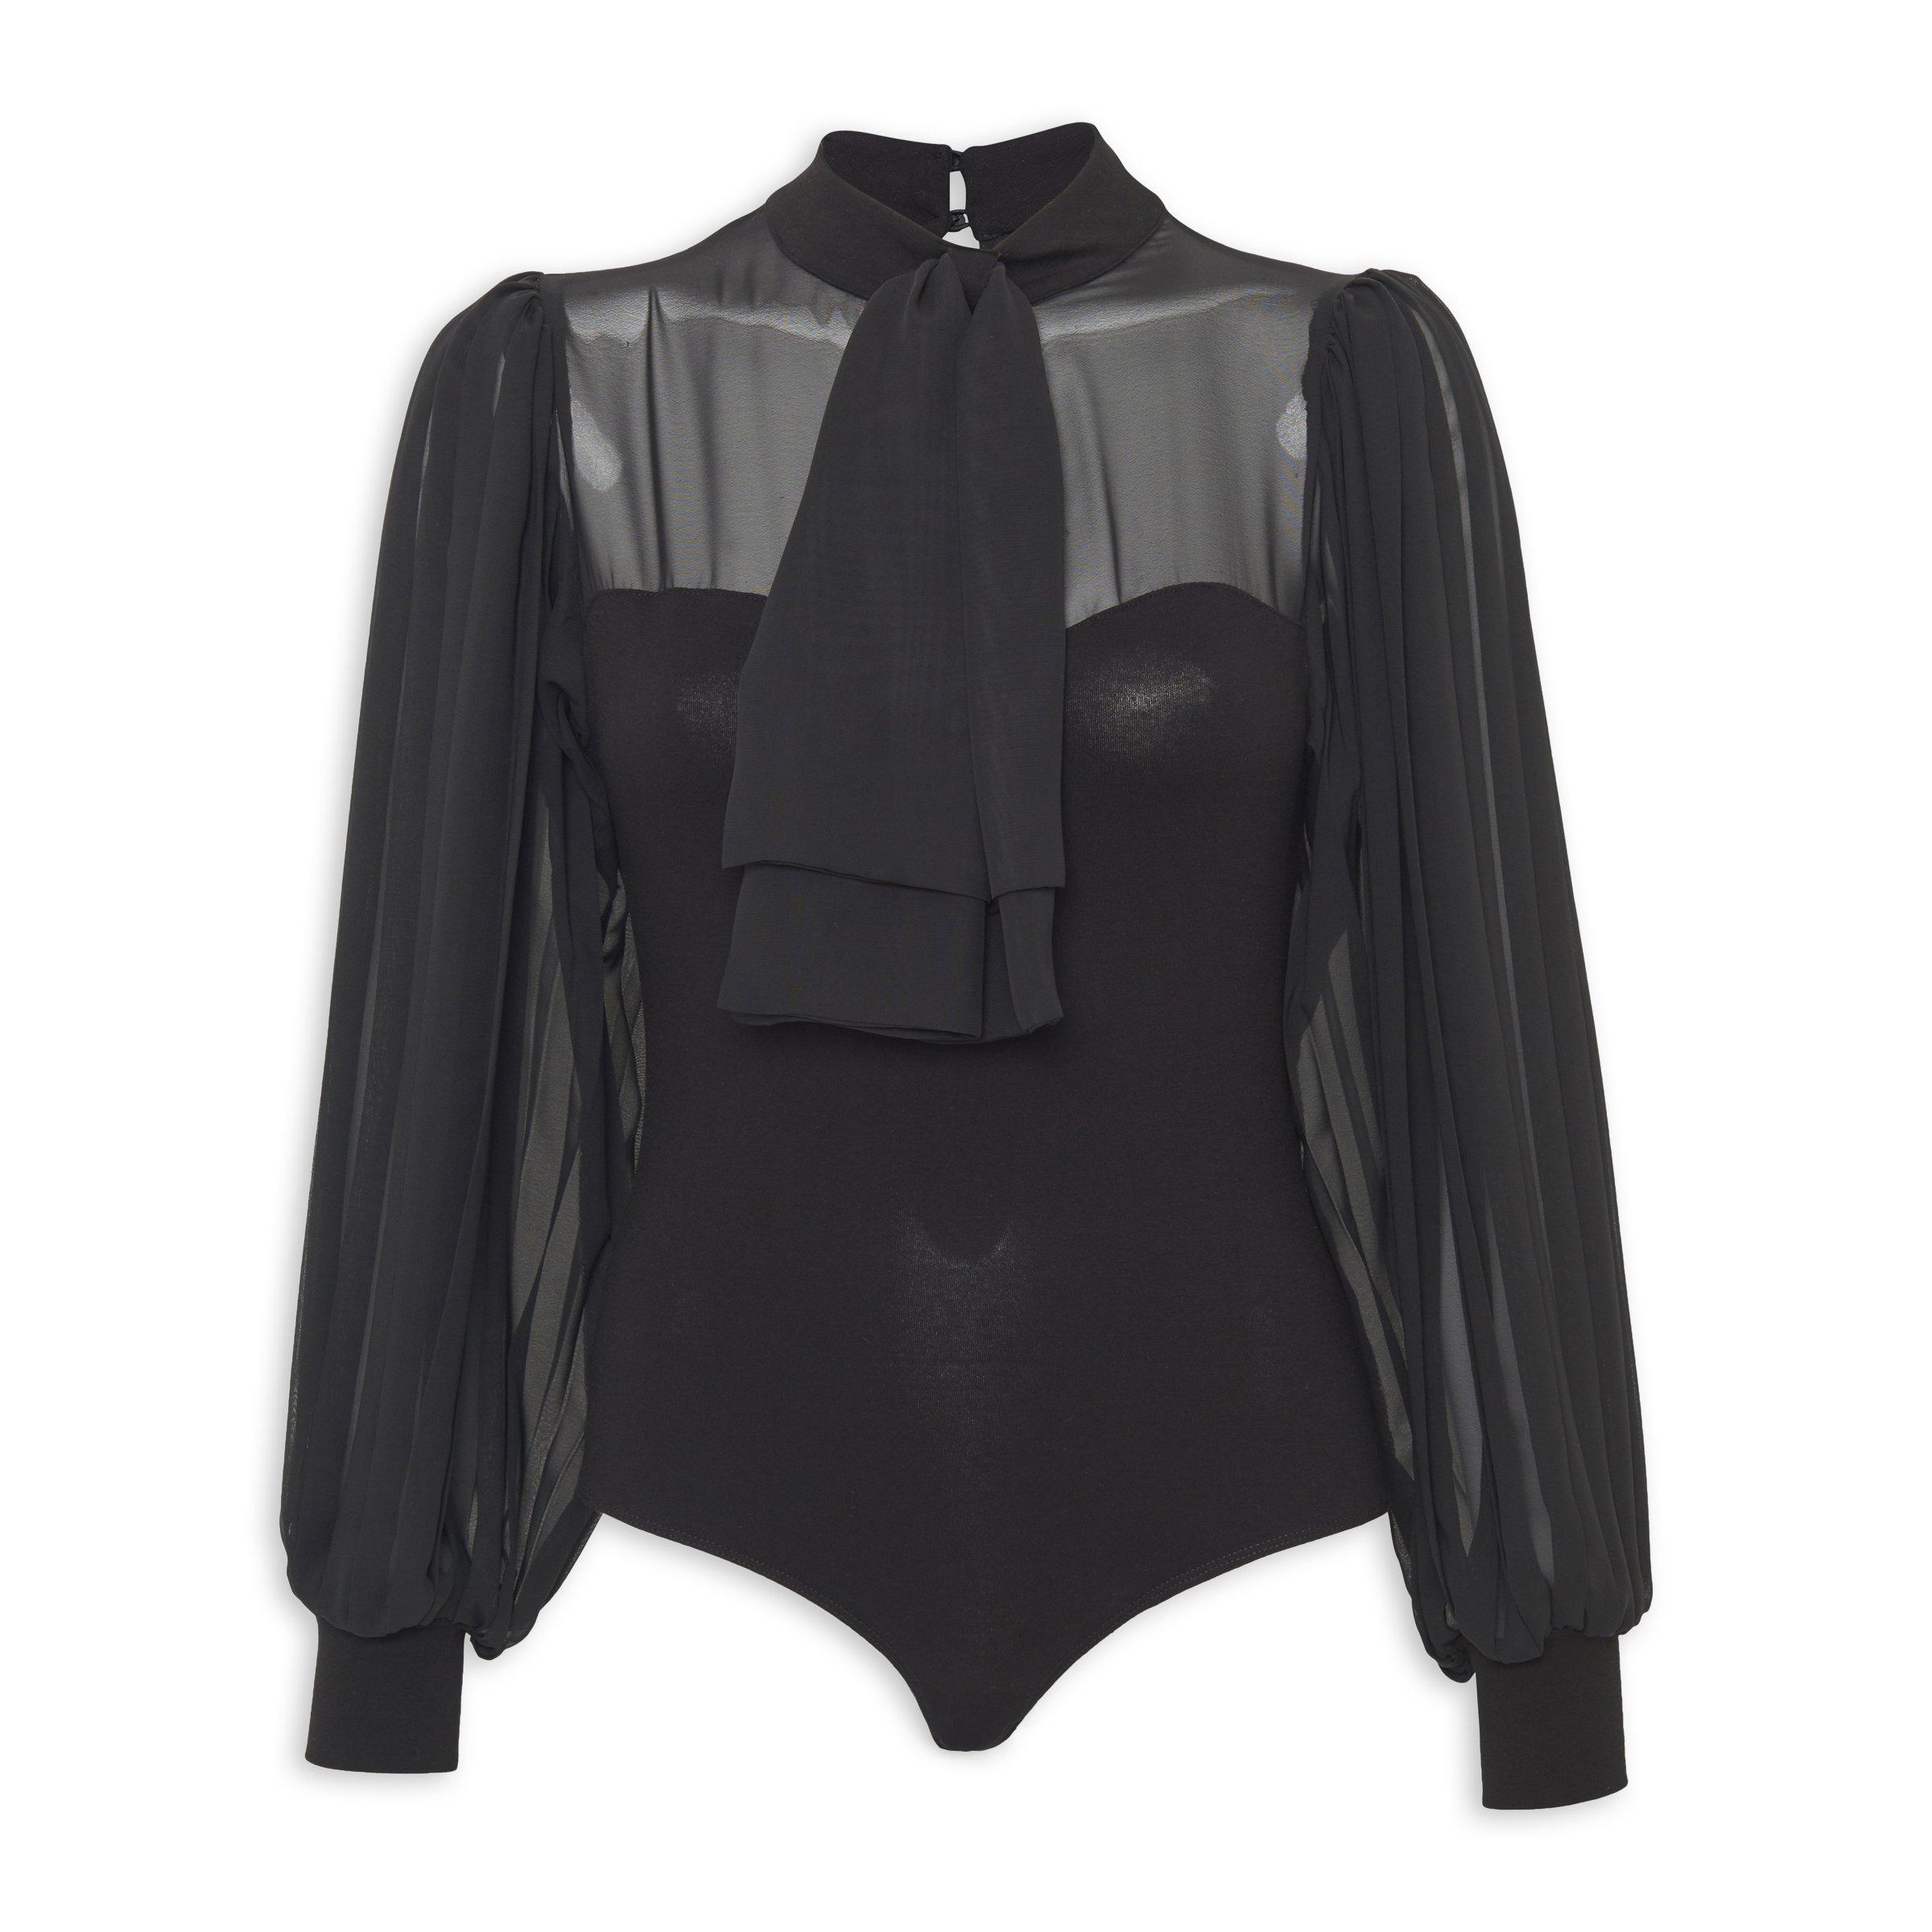 Buy Truworths Black Bodysuit Online | Truworths